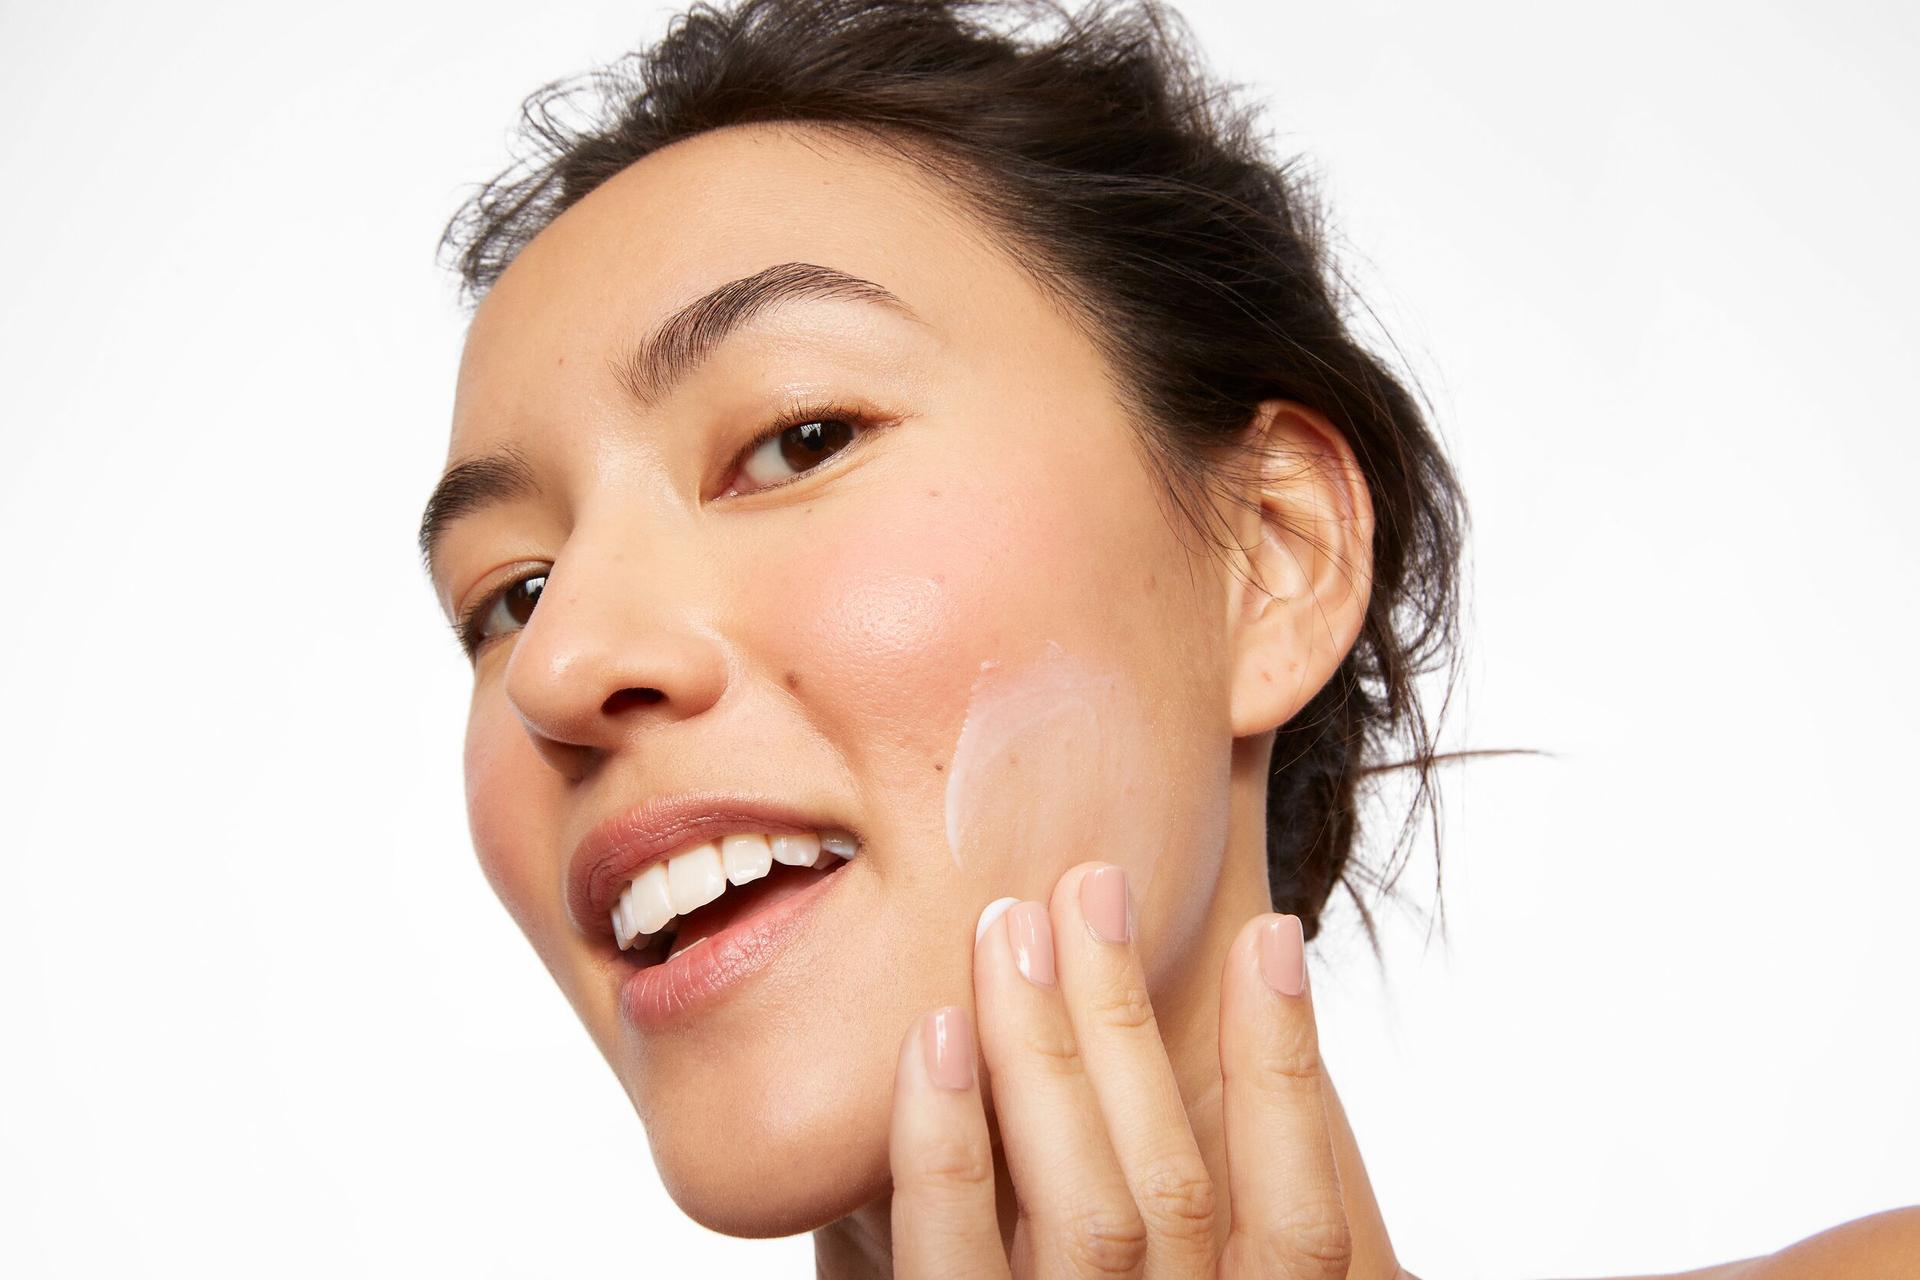 Beauty Pie model applying face cream